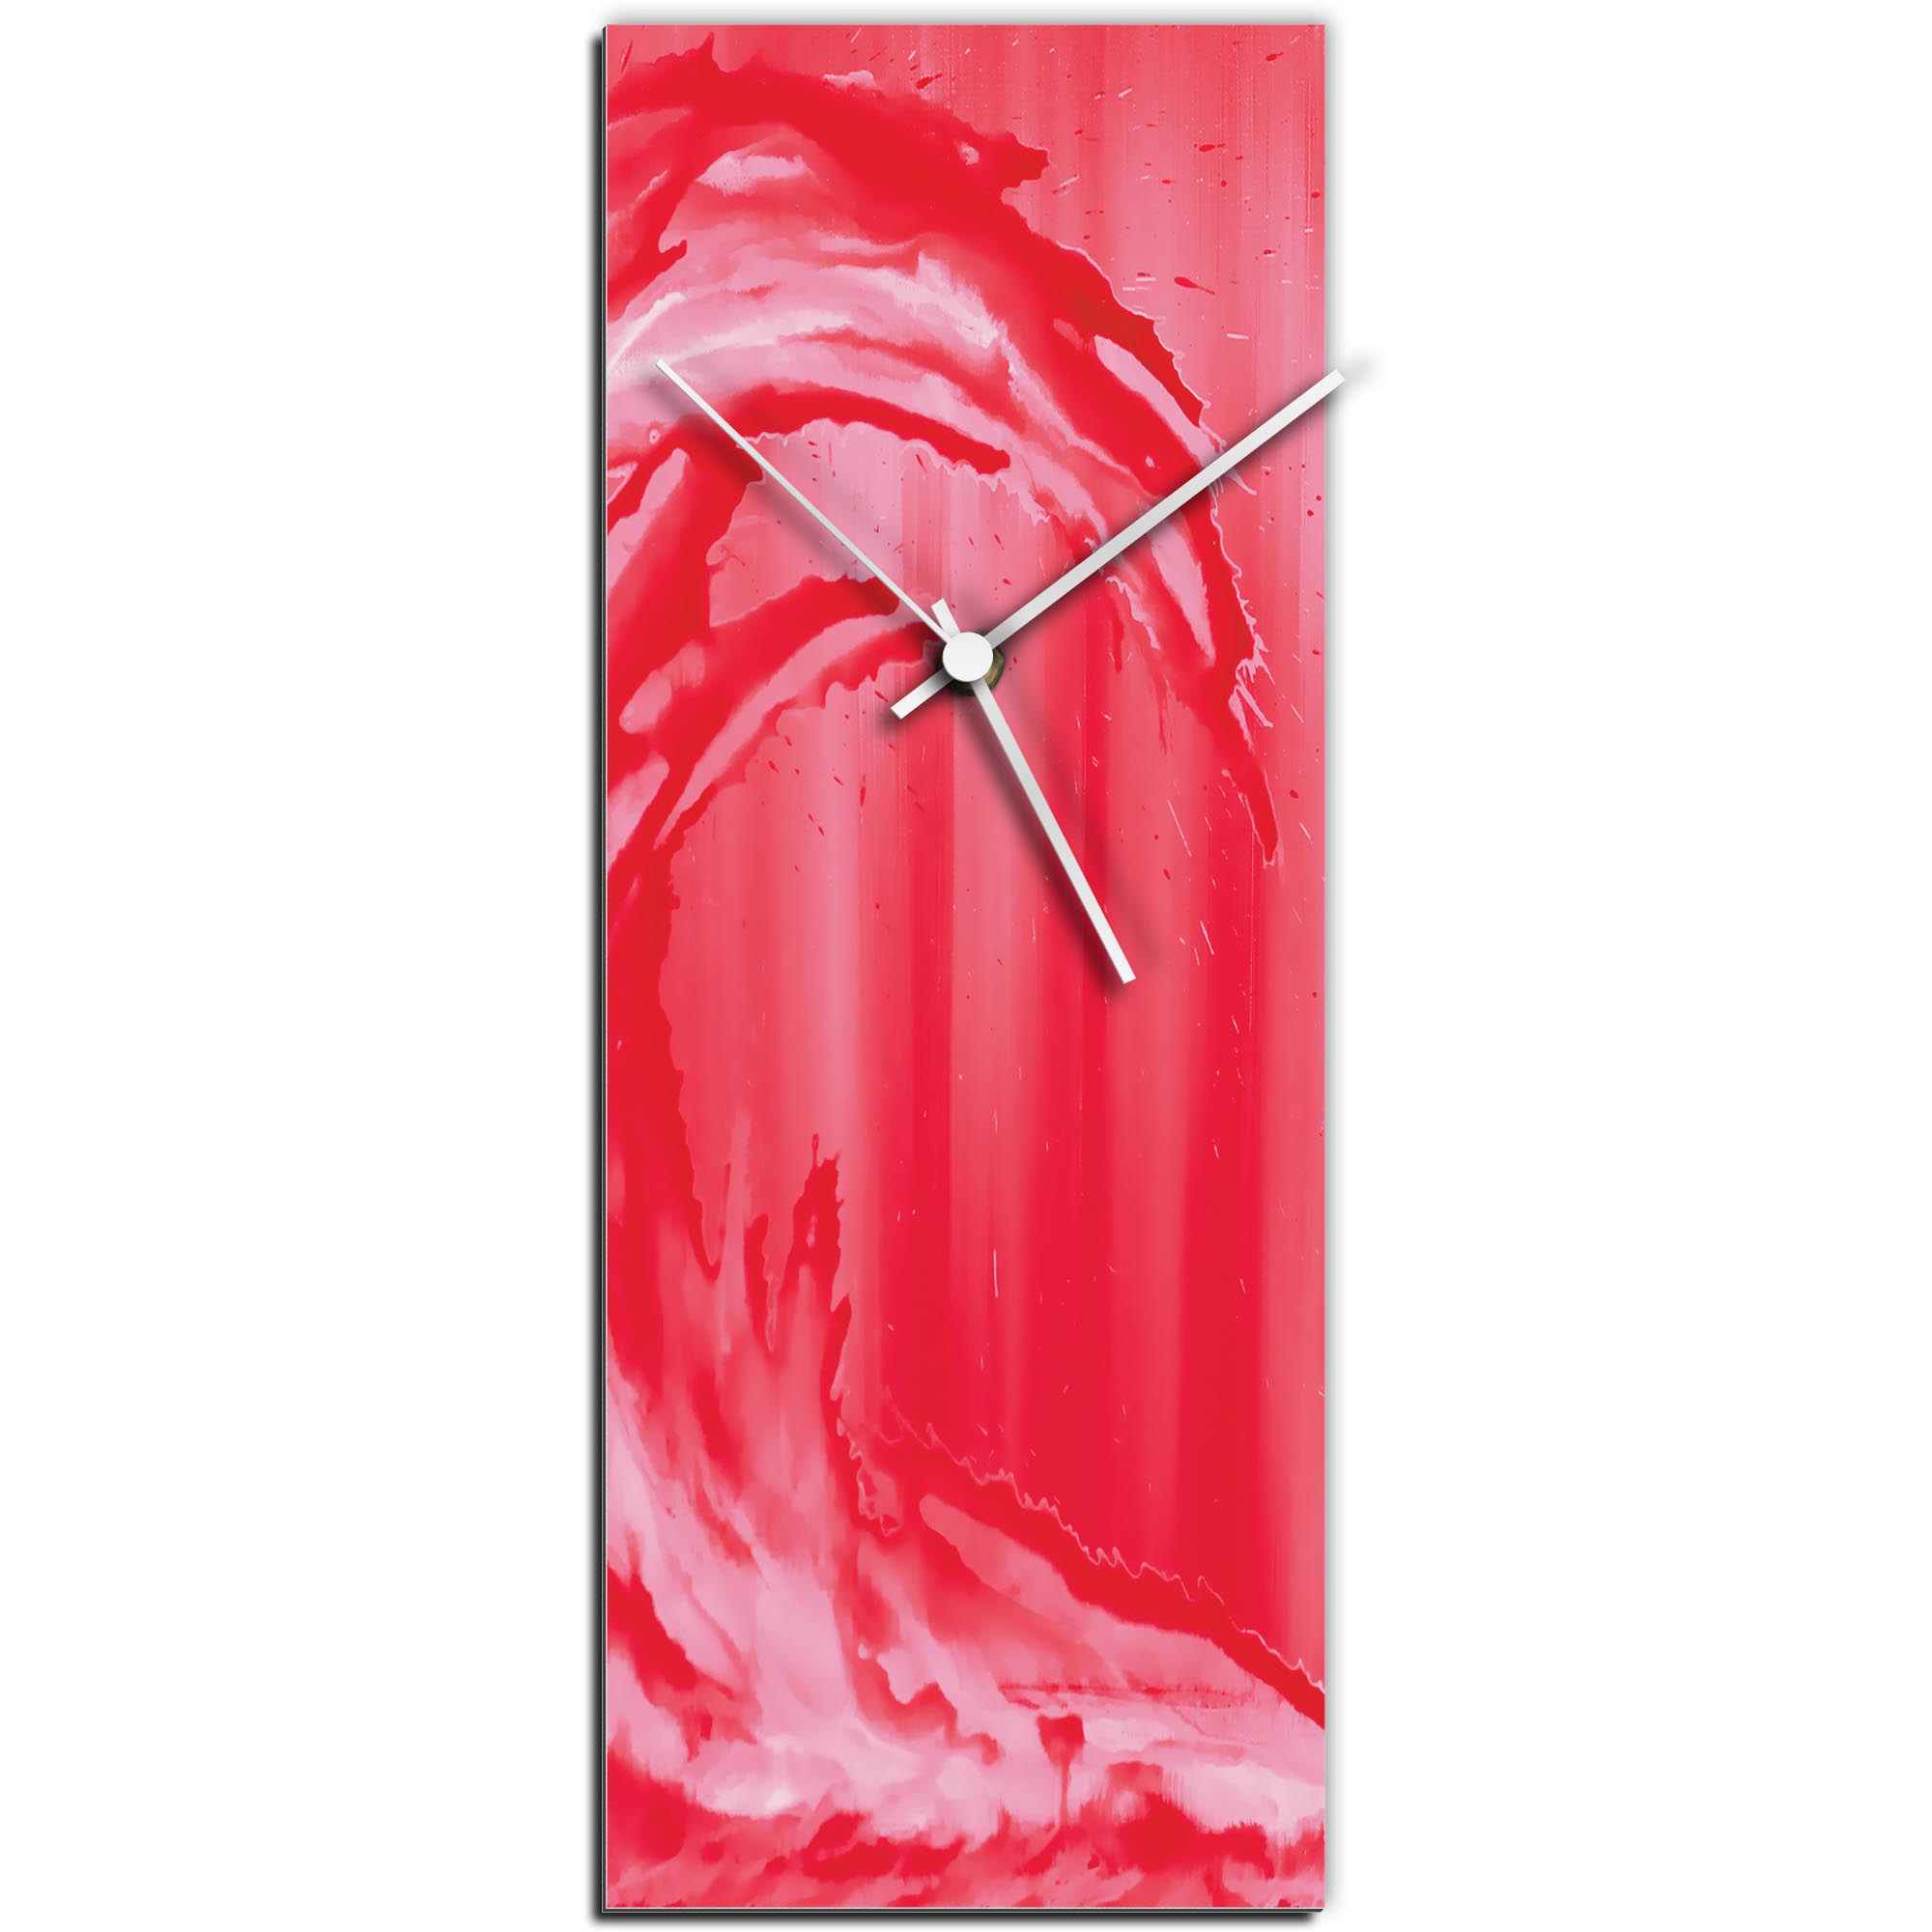 Mendo Vasilevski 'Red Wave v1 Clock' 6in x 16in Modern Wall Clock on Aluminum Composite